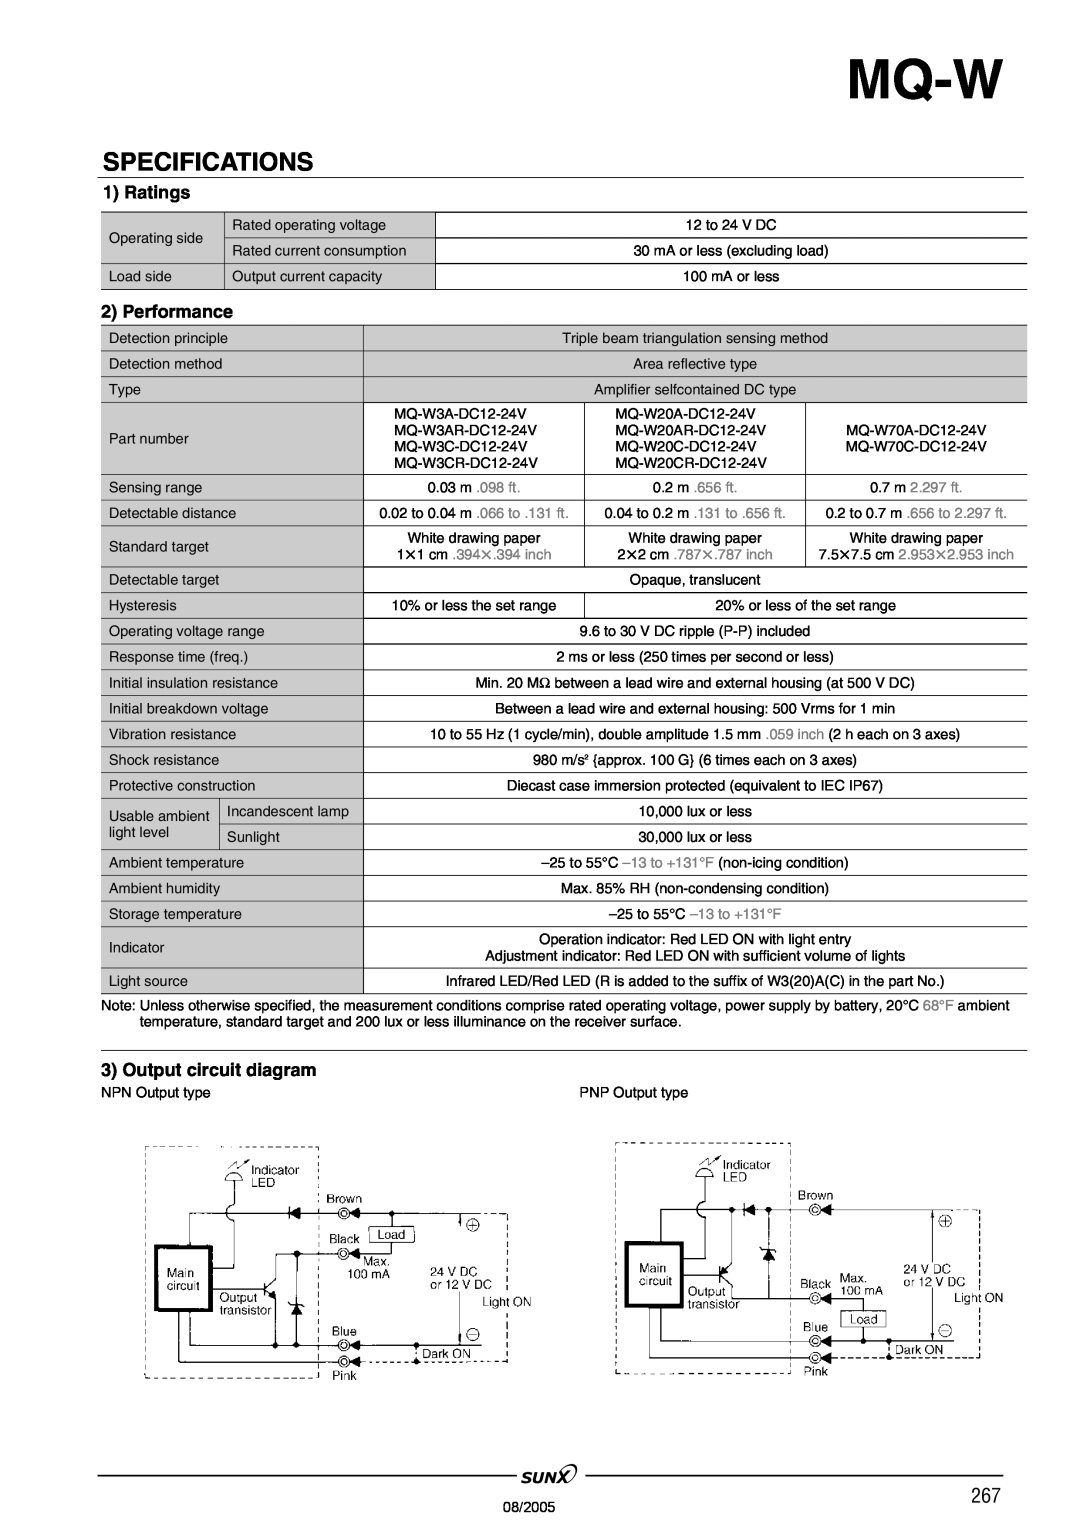 Panasonic MW-W20, MQ-W3 manual Mq-W, Specifications, Ratings, Performance, Output circuit diagram, 1 1 cm .394 .394 inch 